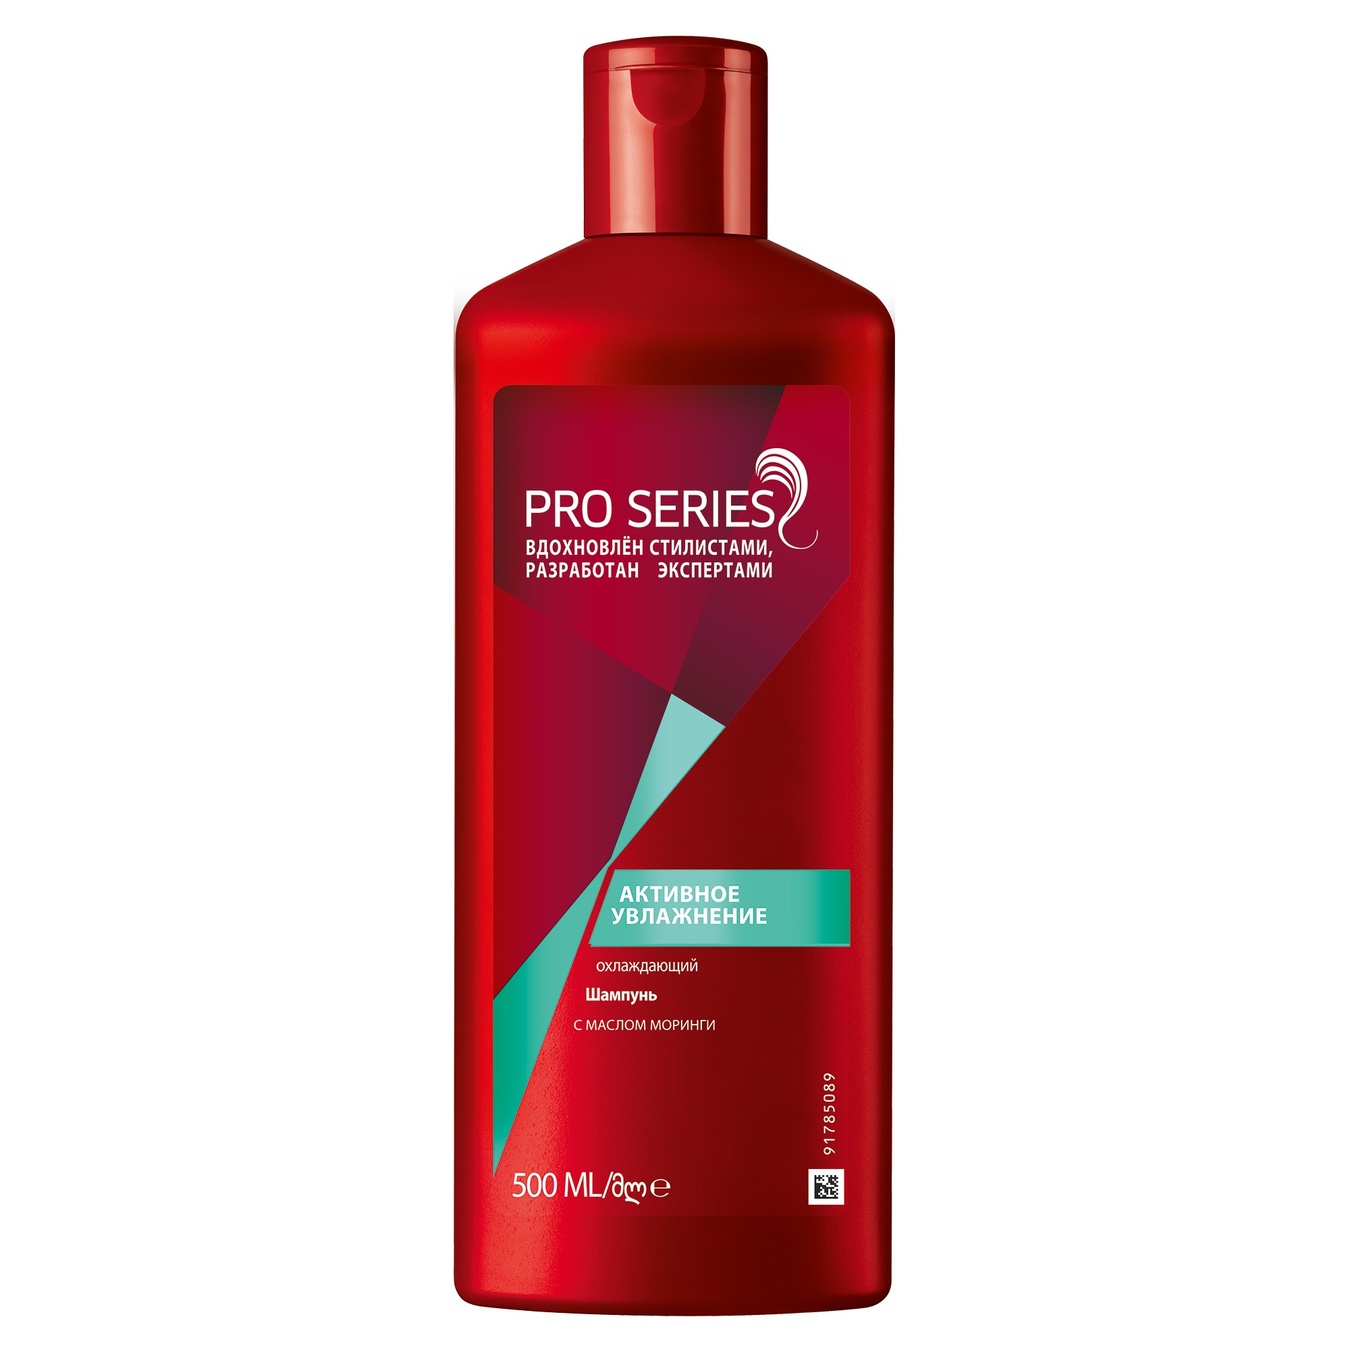 Shampoo Pro Series active moisturizing 500 ml